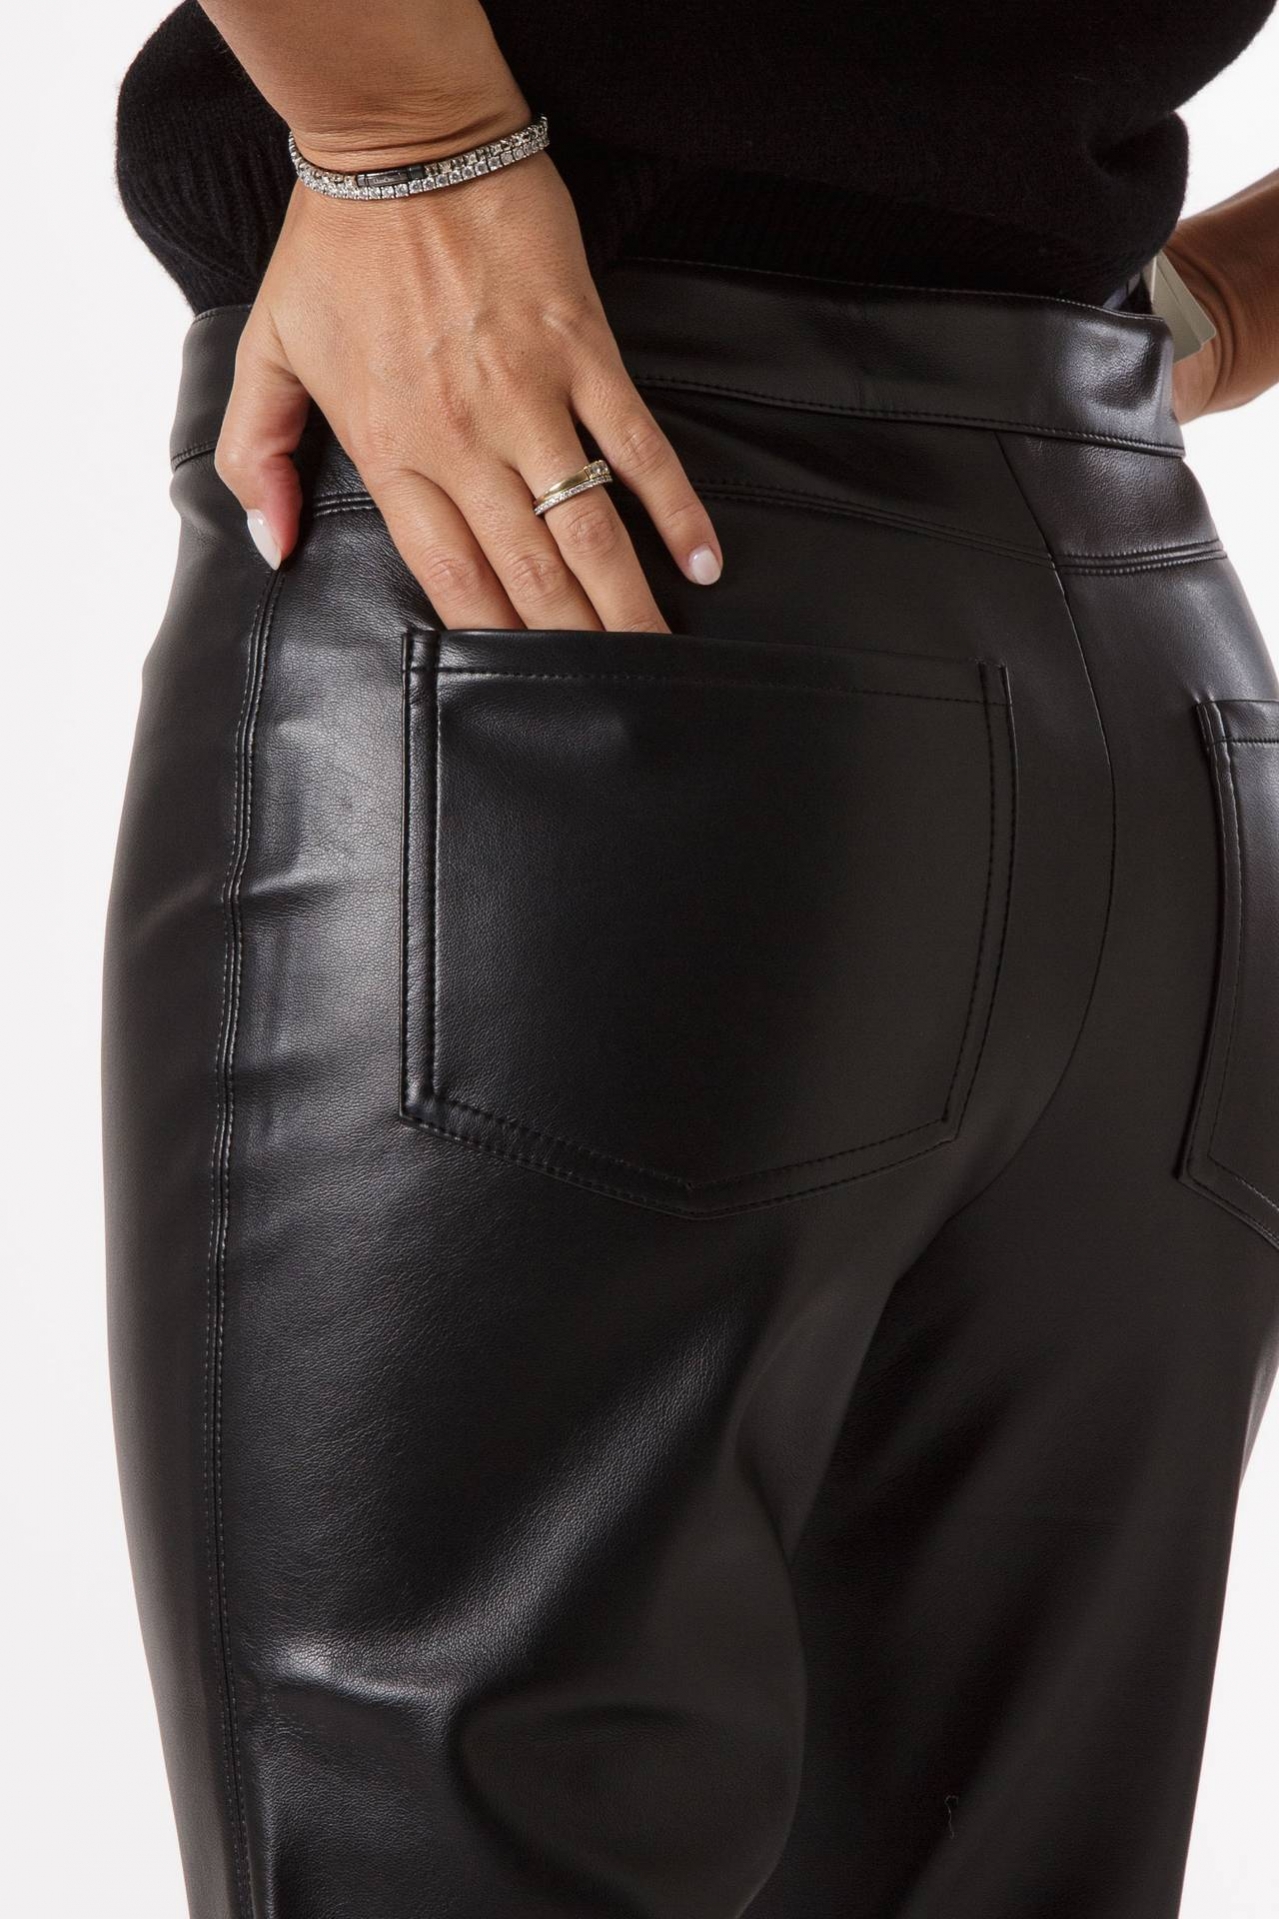 KARUB faux leather trousers